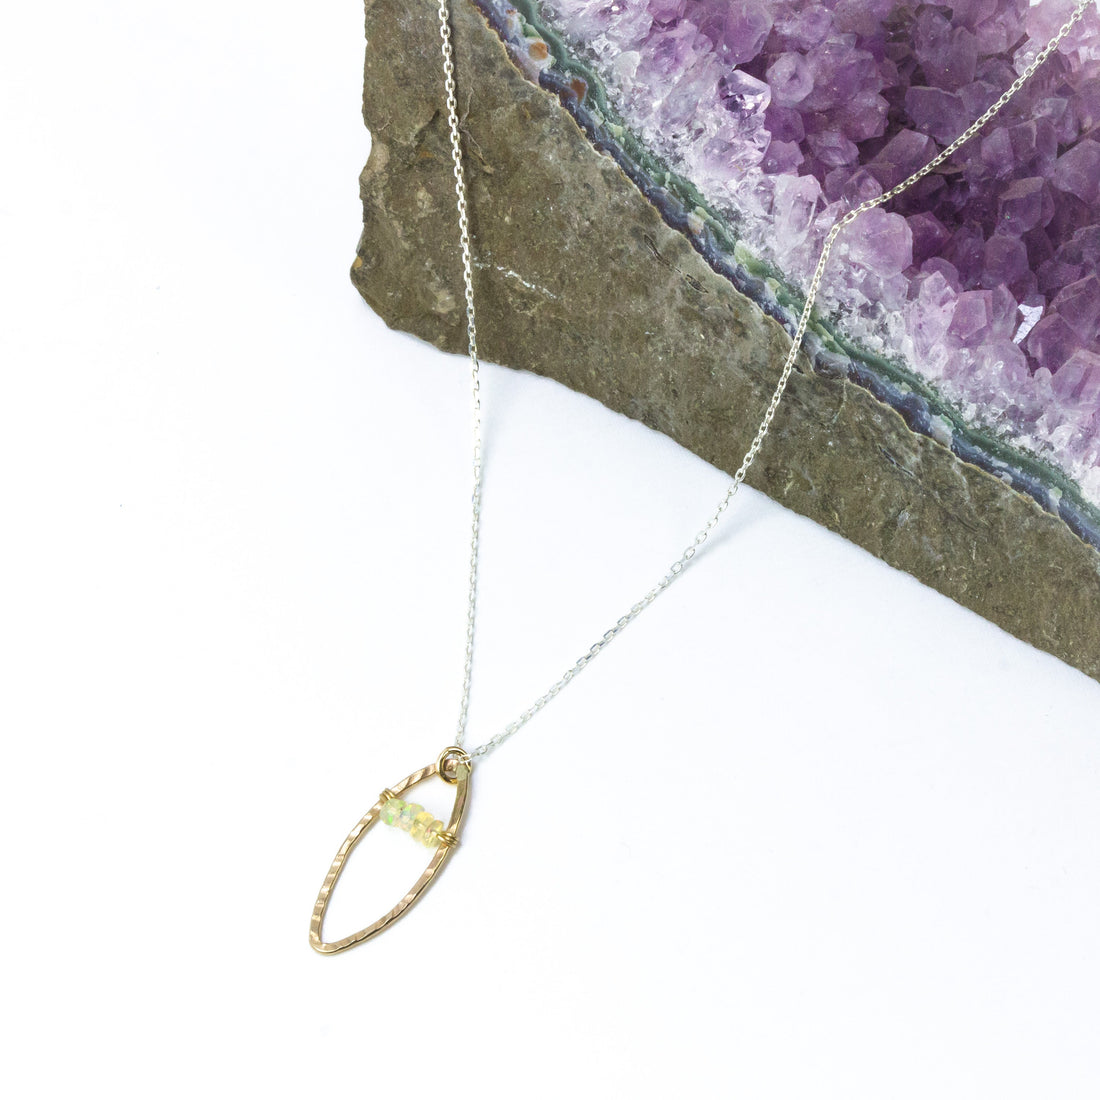 handmade gold filled opal pendant silver chain laura j designs